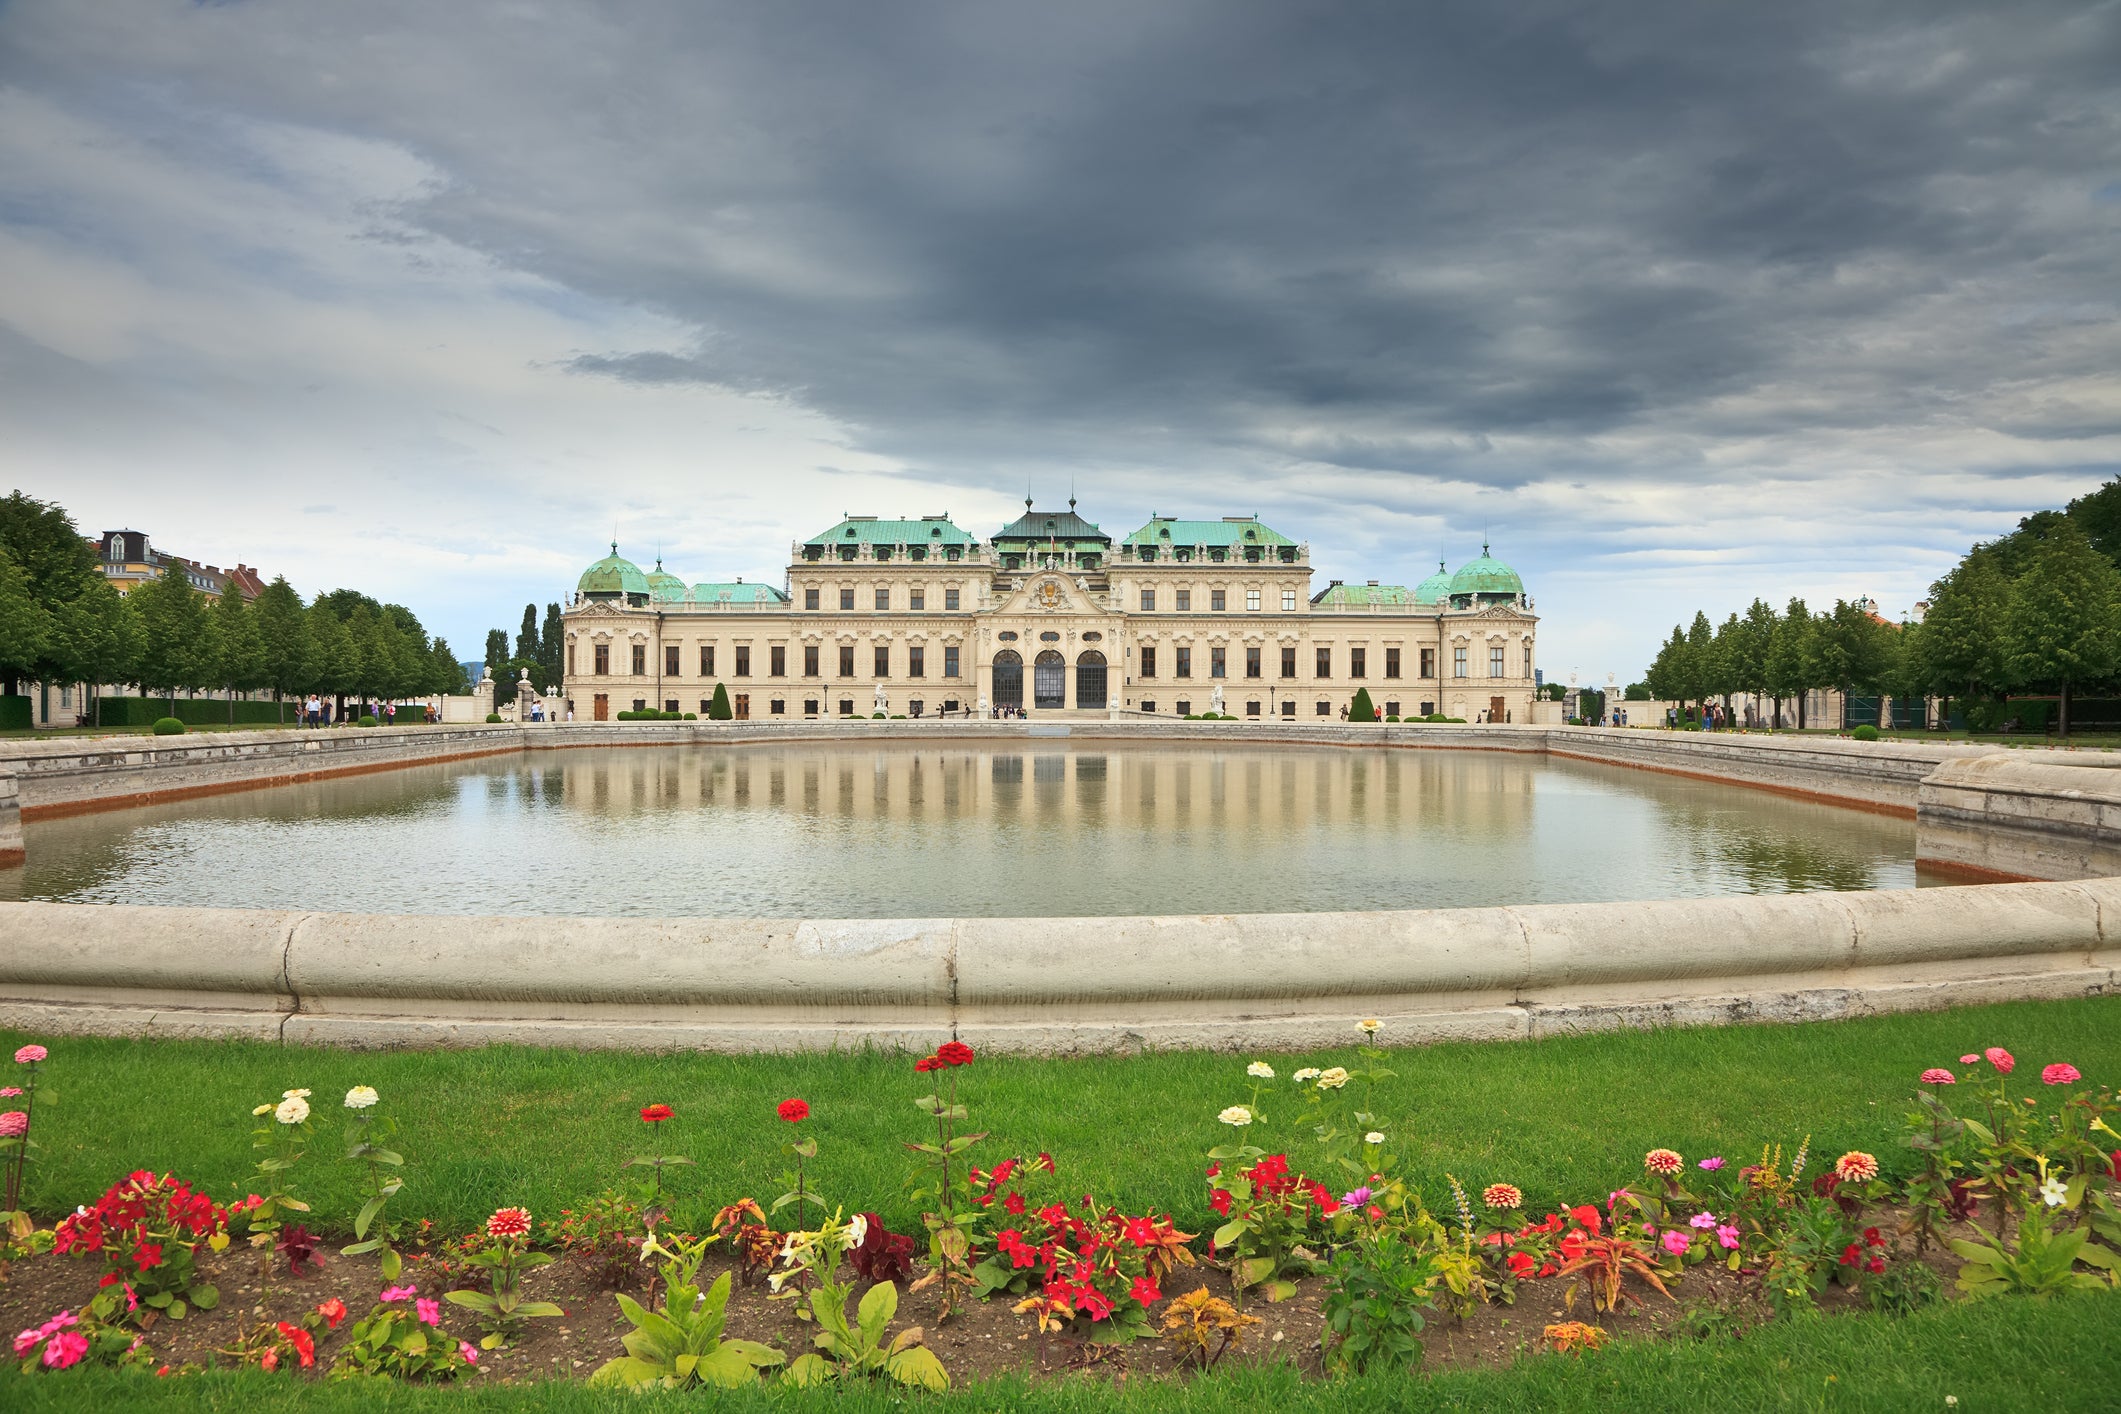 Belvedere palace